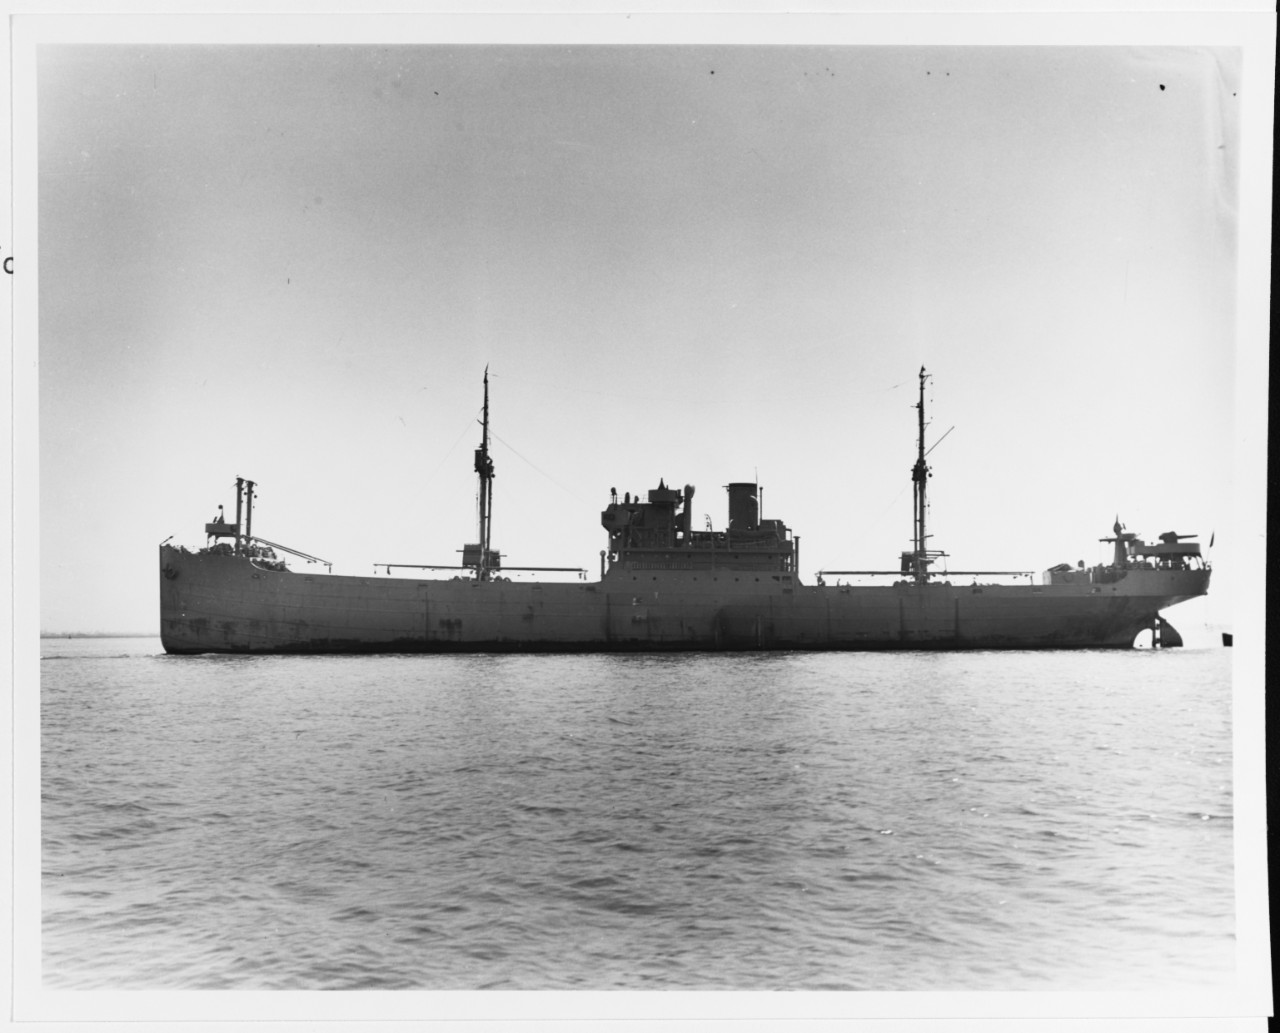 M.V. VLADIMIR MAYAKOVSKI (U.S.S.R. Merchant Cargo Ship, 1930-68)